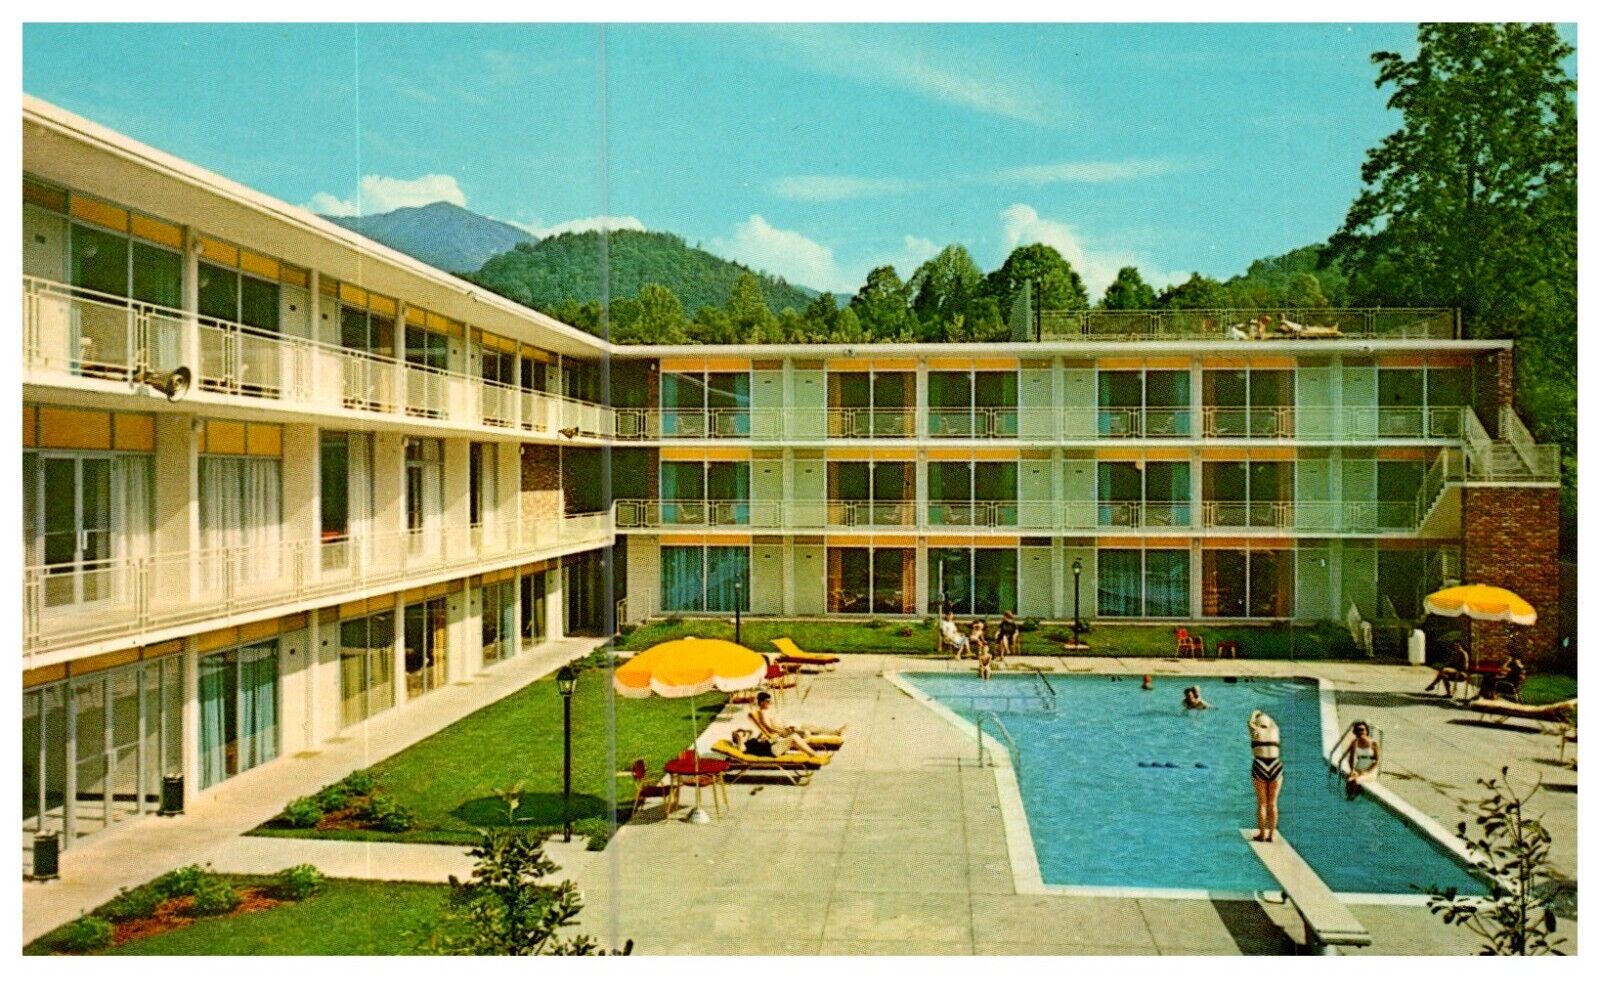 Holiday Inn Motel Gatlinburg, Tennessee Hotel Advertising Vintage Postcard